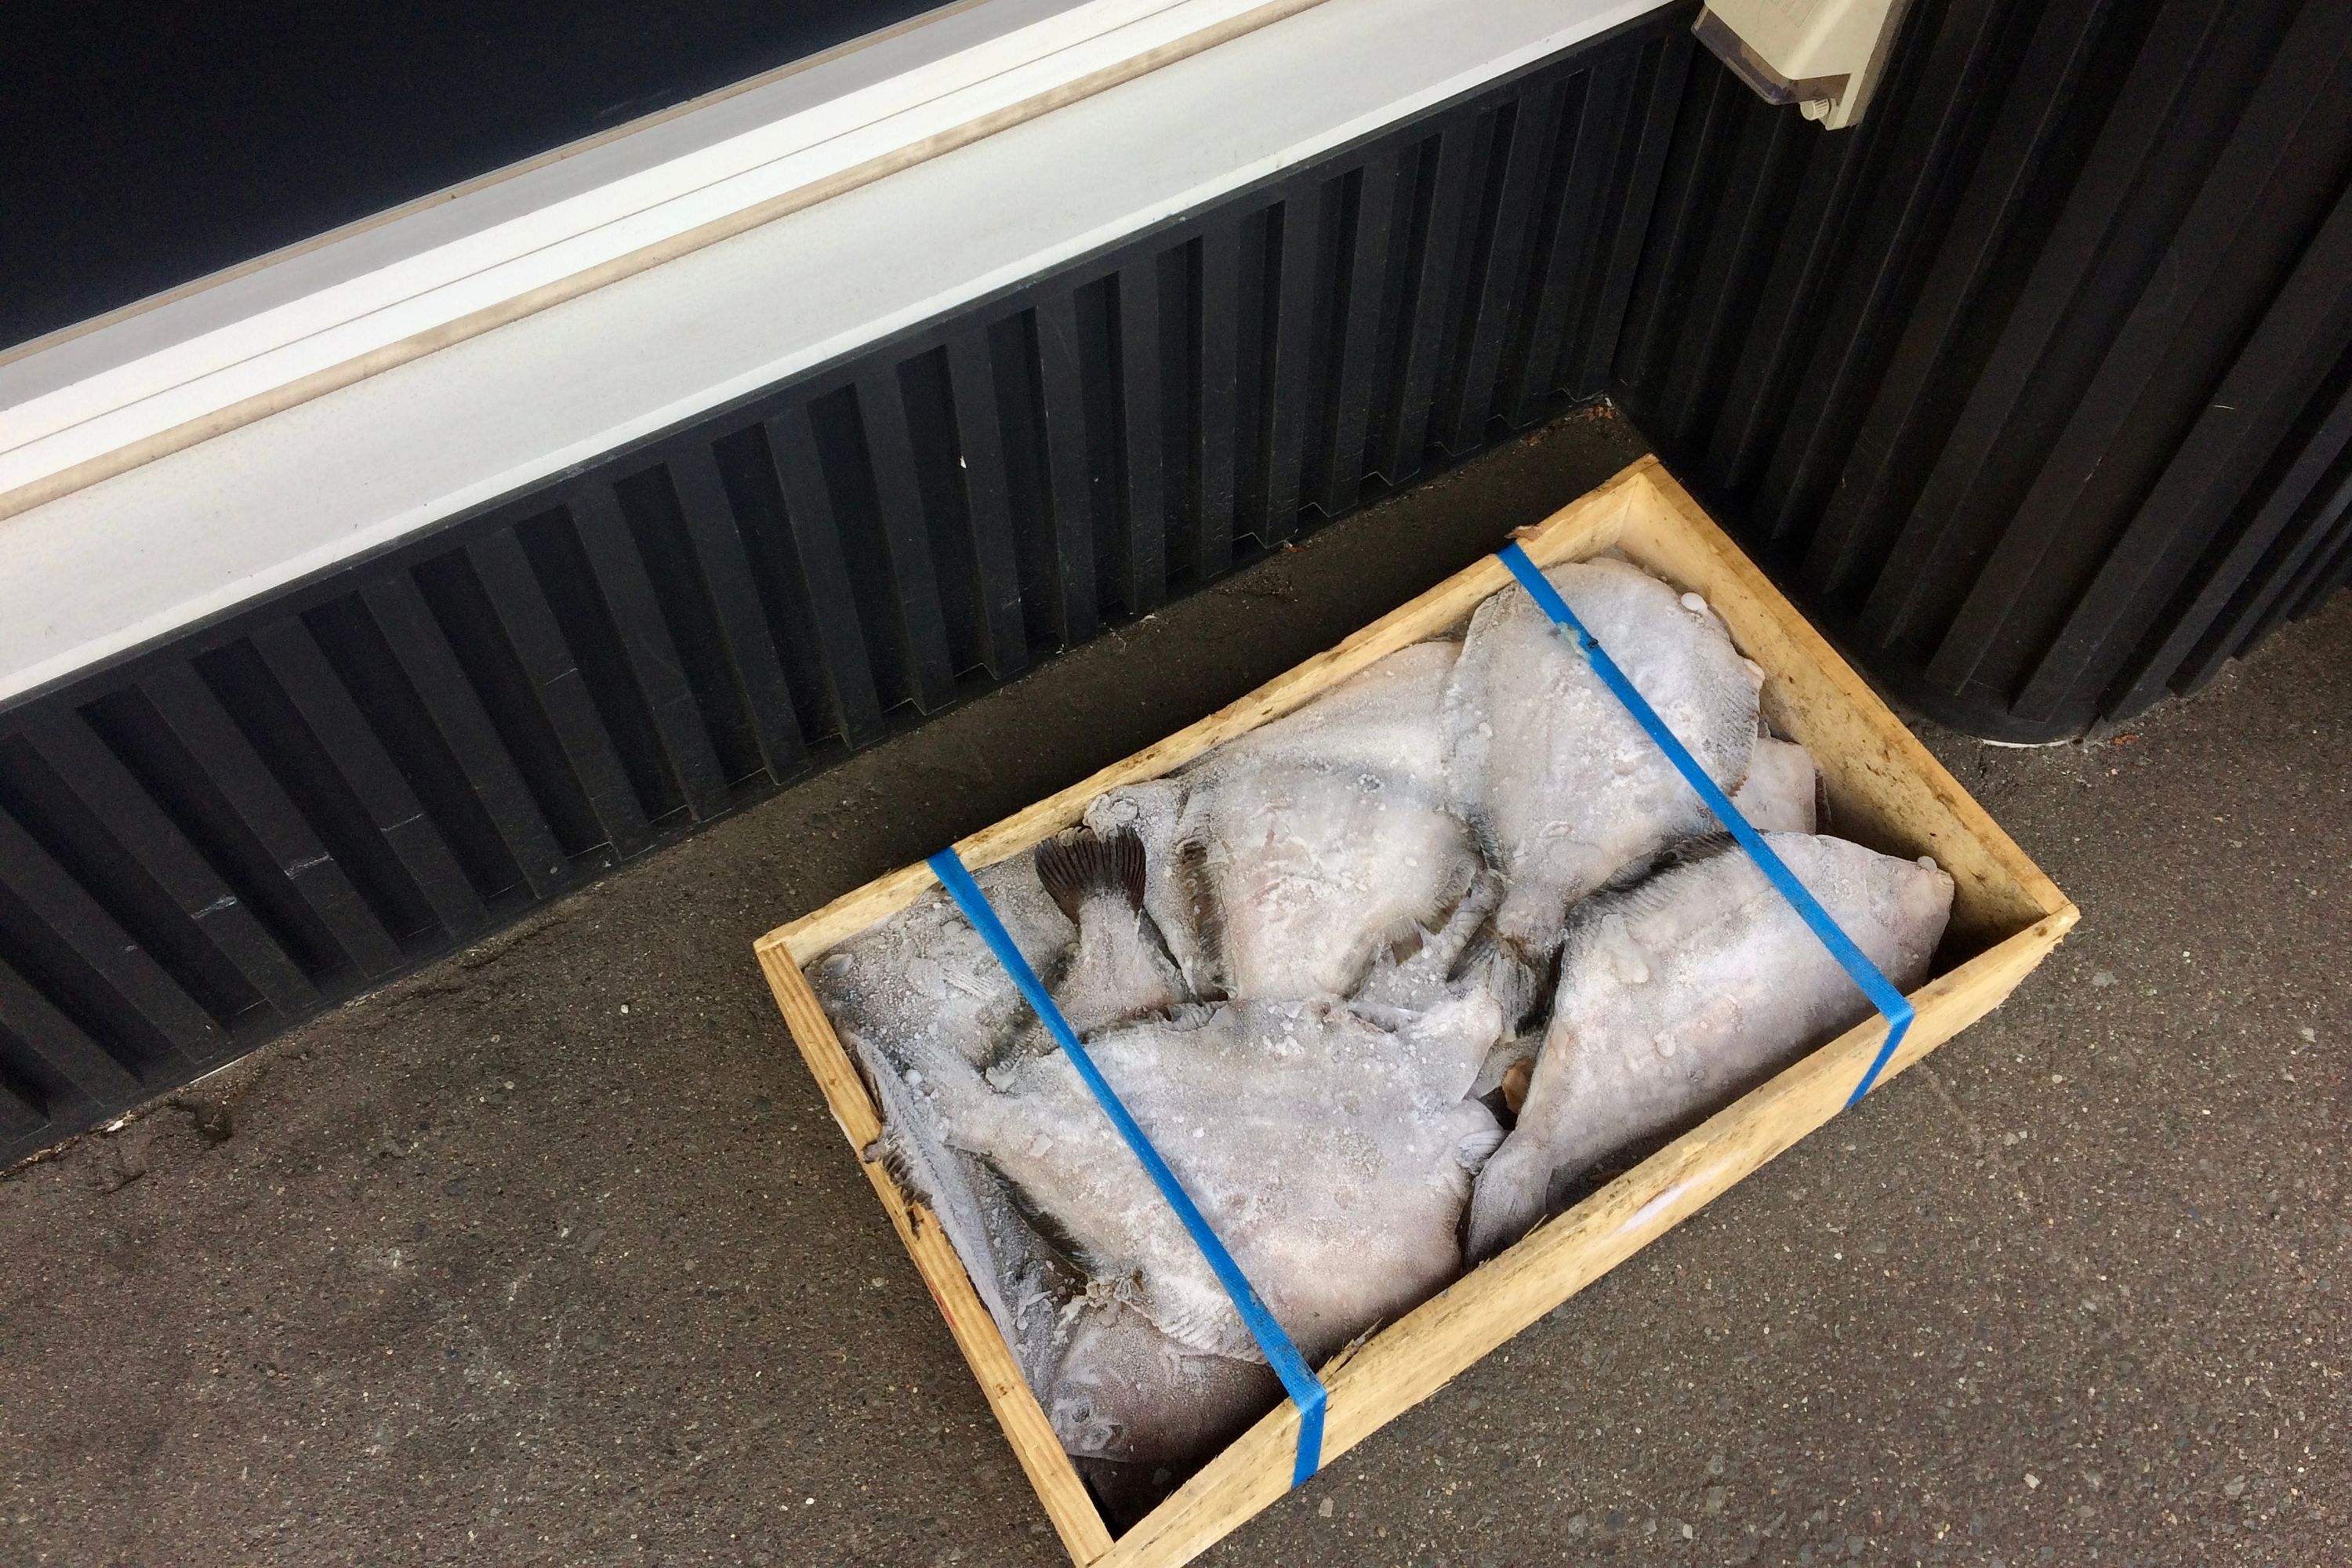 Frozen flatfish in a wooden crate.